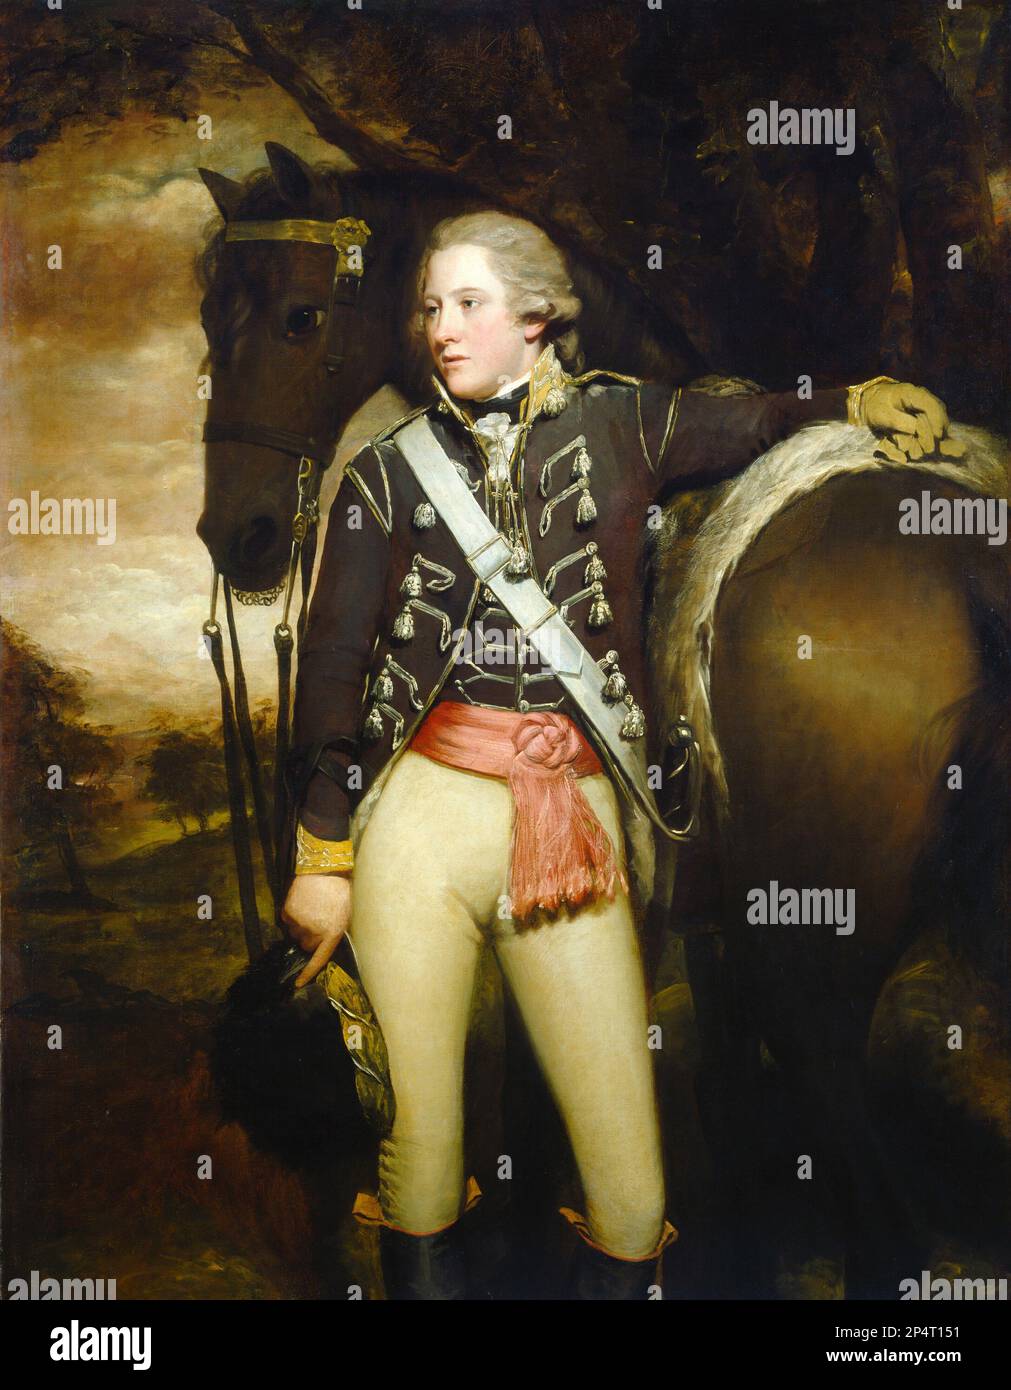 Henry Rayburn Capitano Patrick Miller 1788/1789, Foto Stock